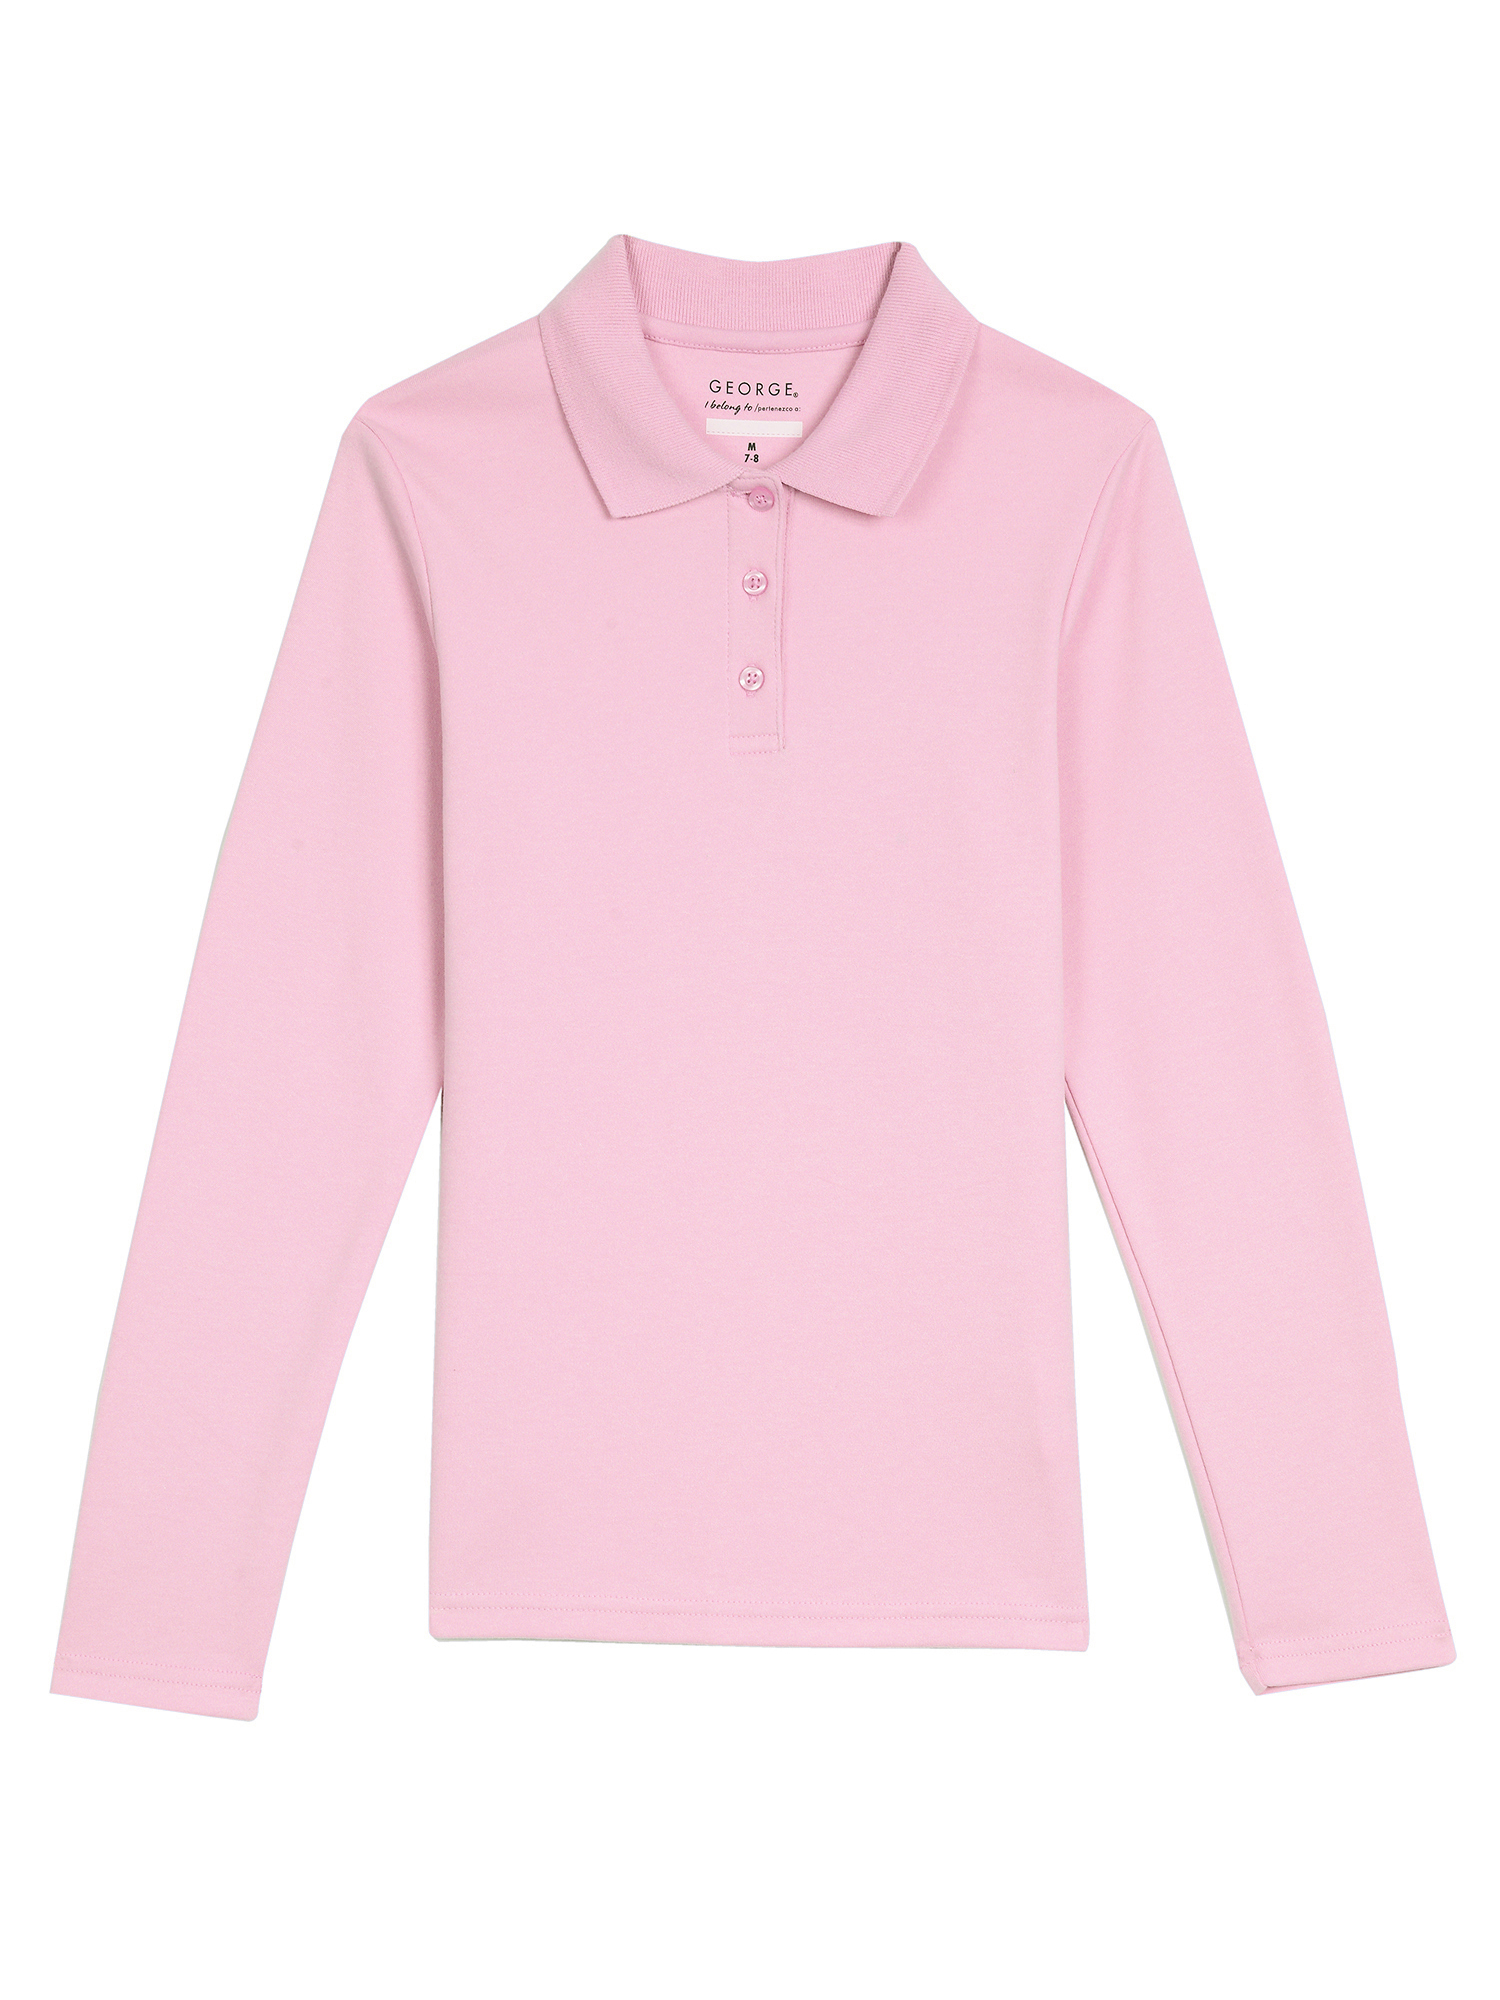 George Girls School Uniform Long Sleeve Polo Shirt (Little Girls & Big Girls) - image 2 of 2